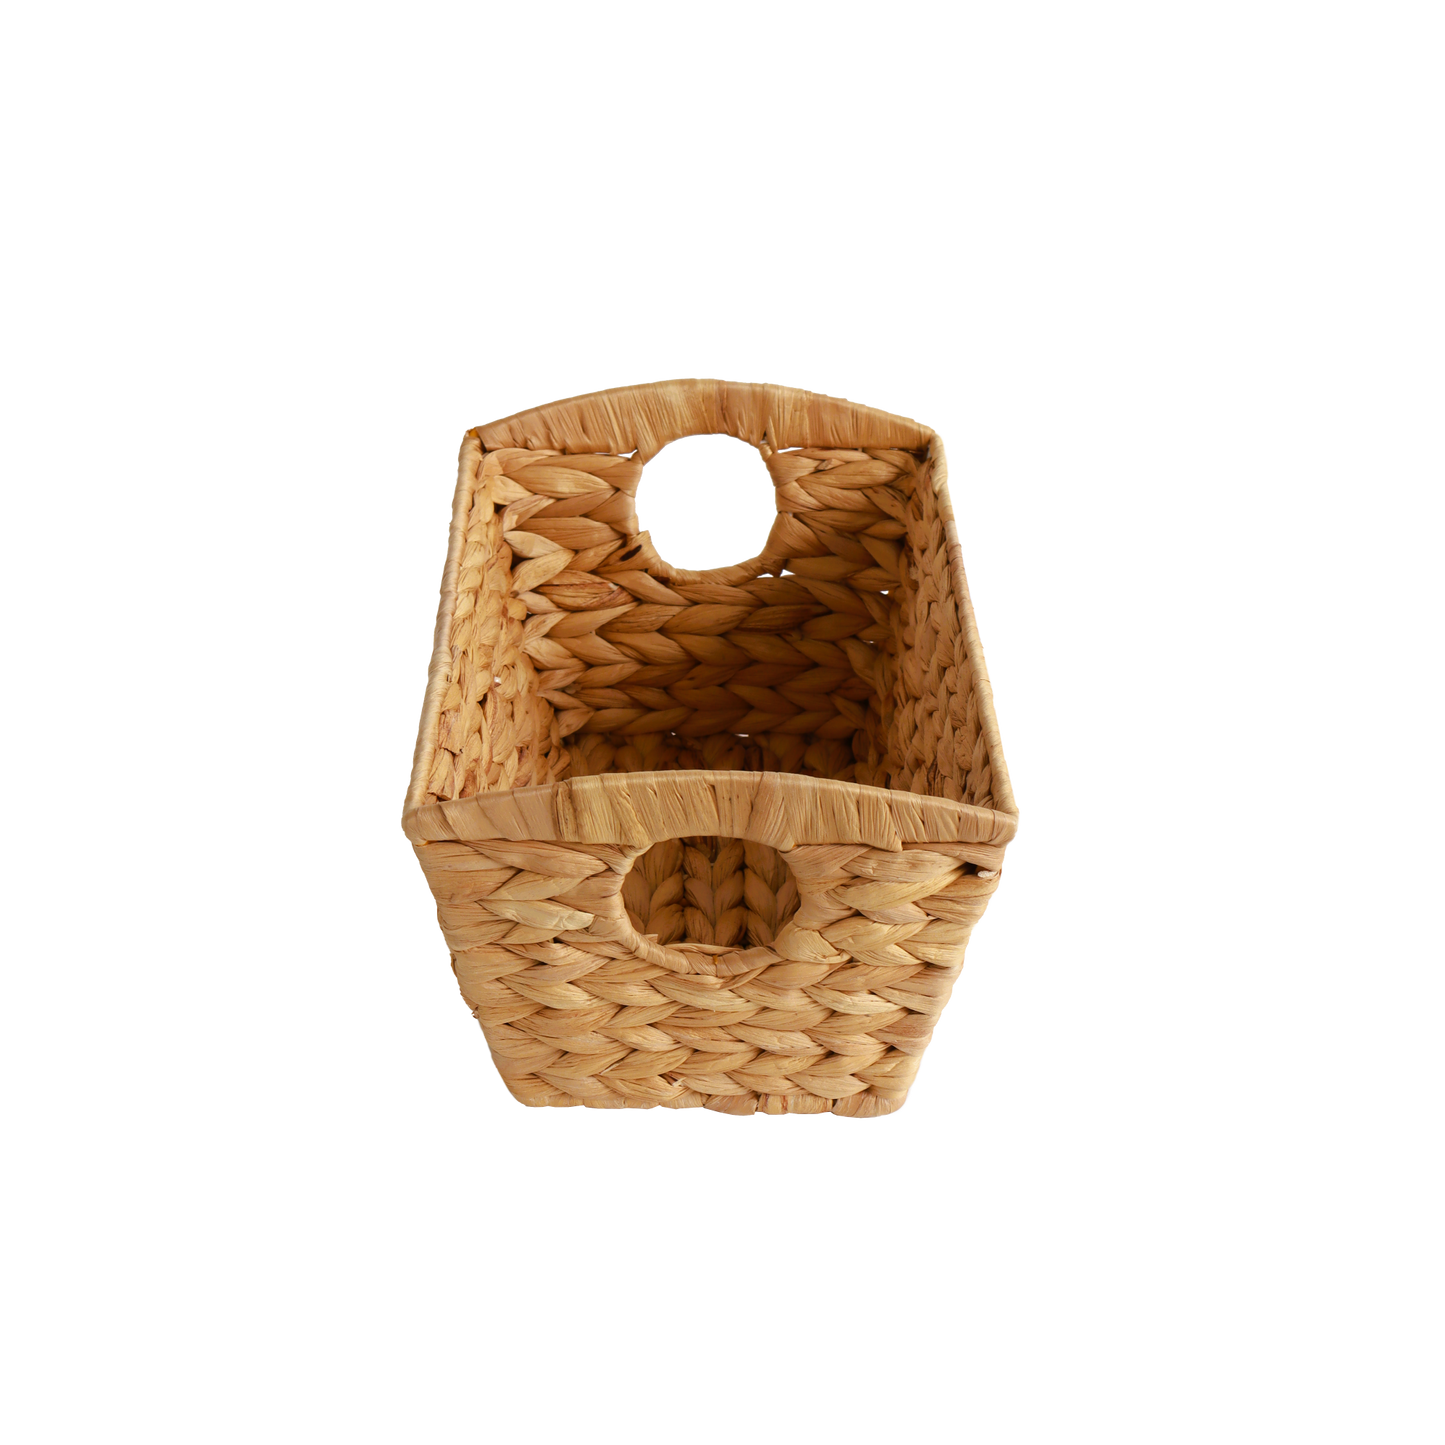 Eden Grace Handmade Rectangular Woven Wicker Basket - Eco-Friendly Stylish Storage Solutions for Home Organization